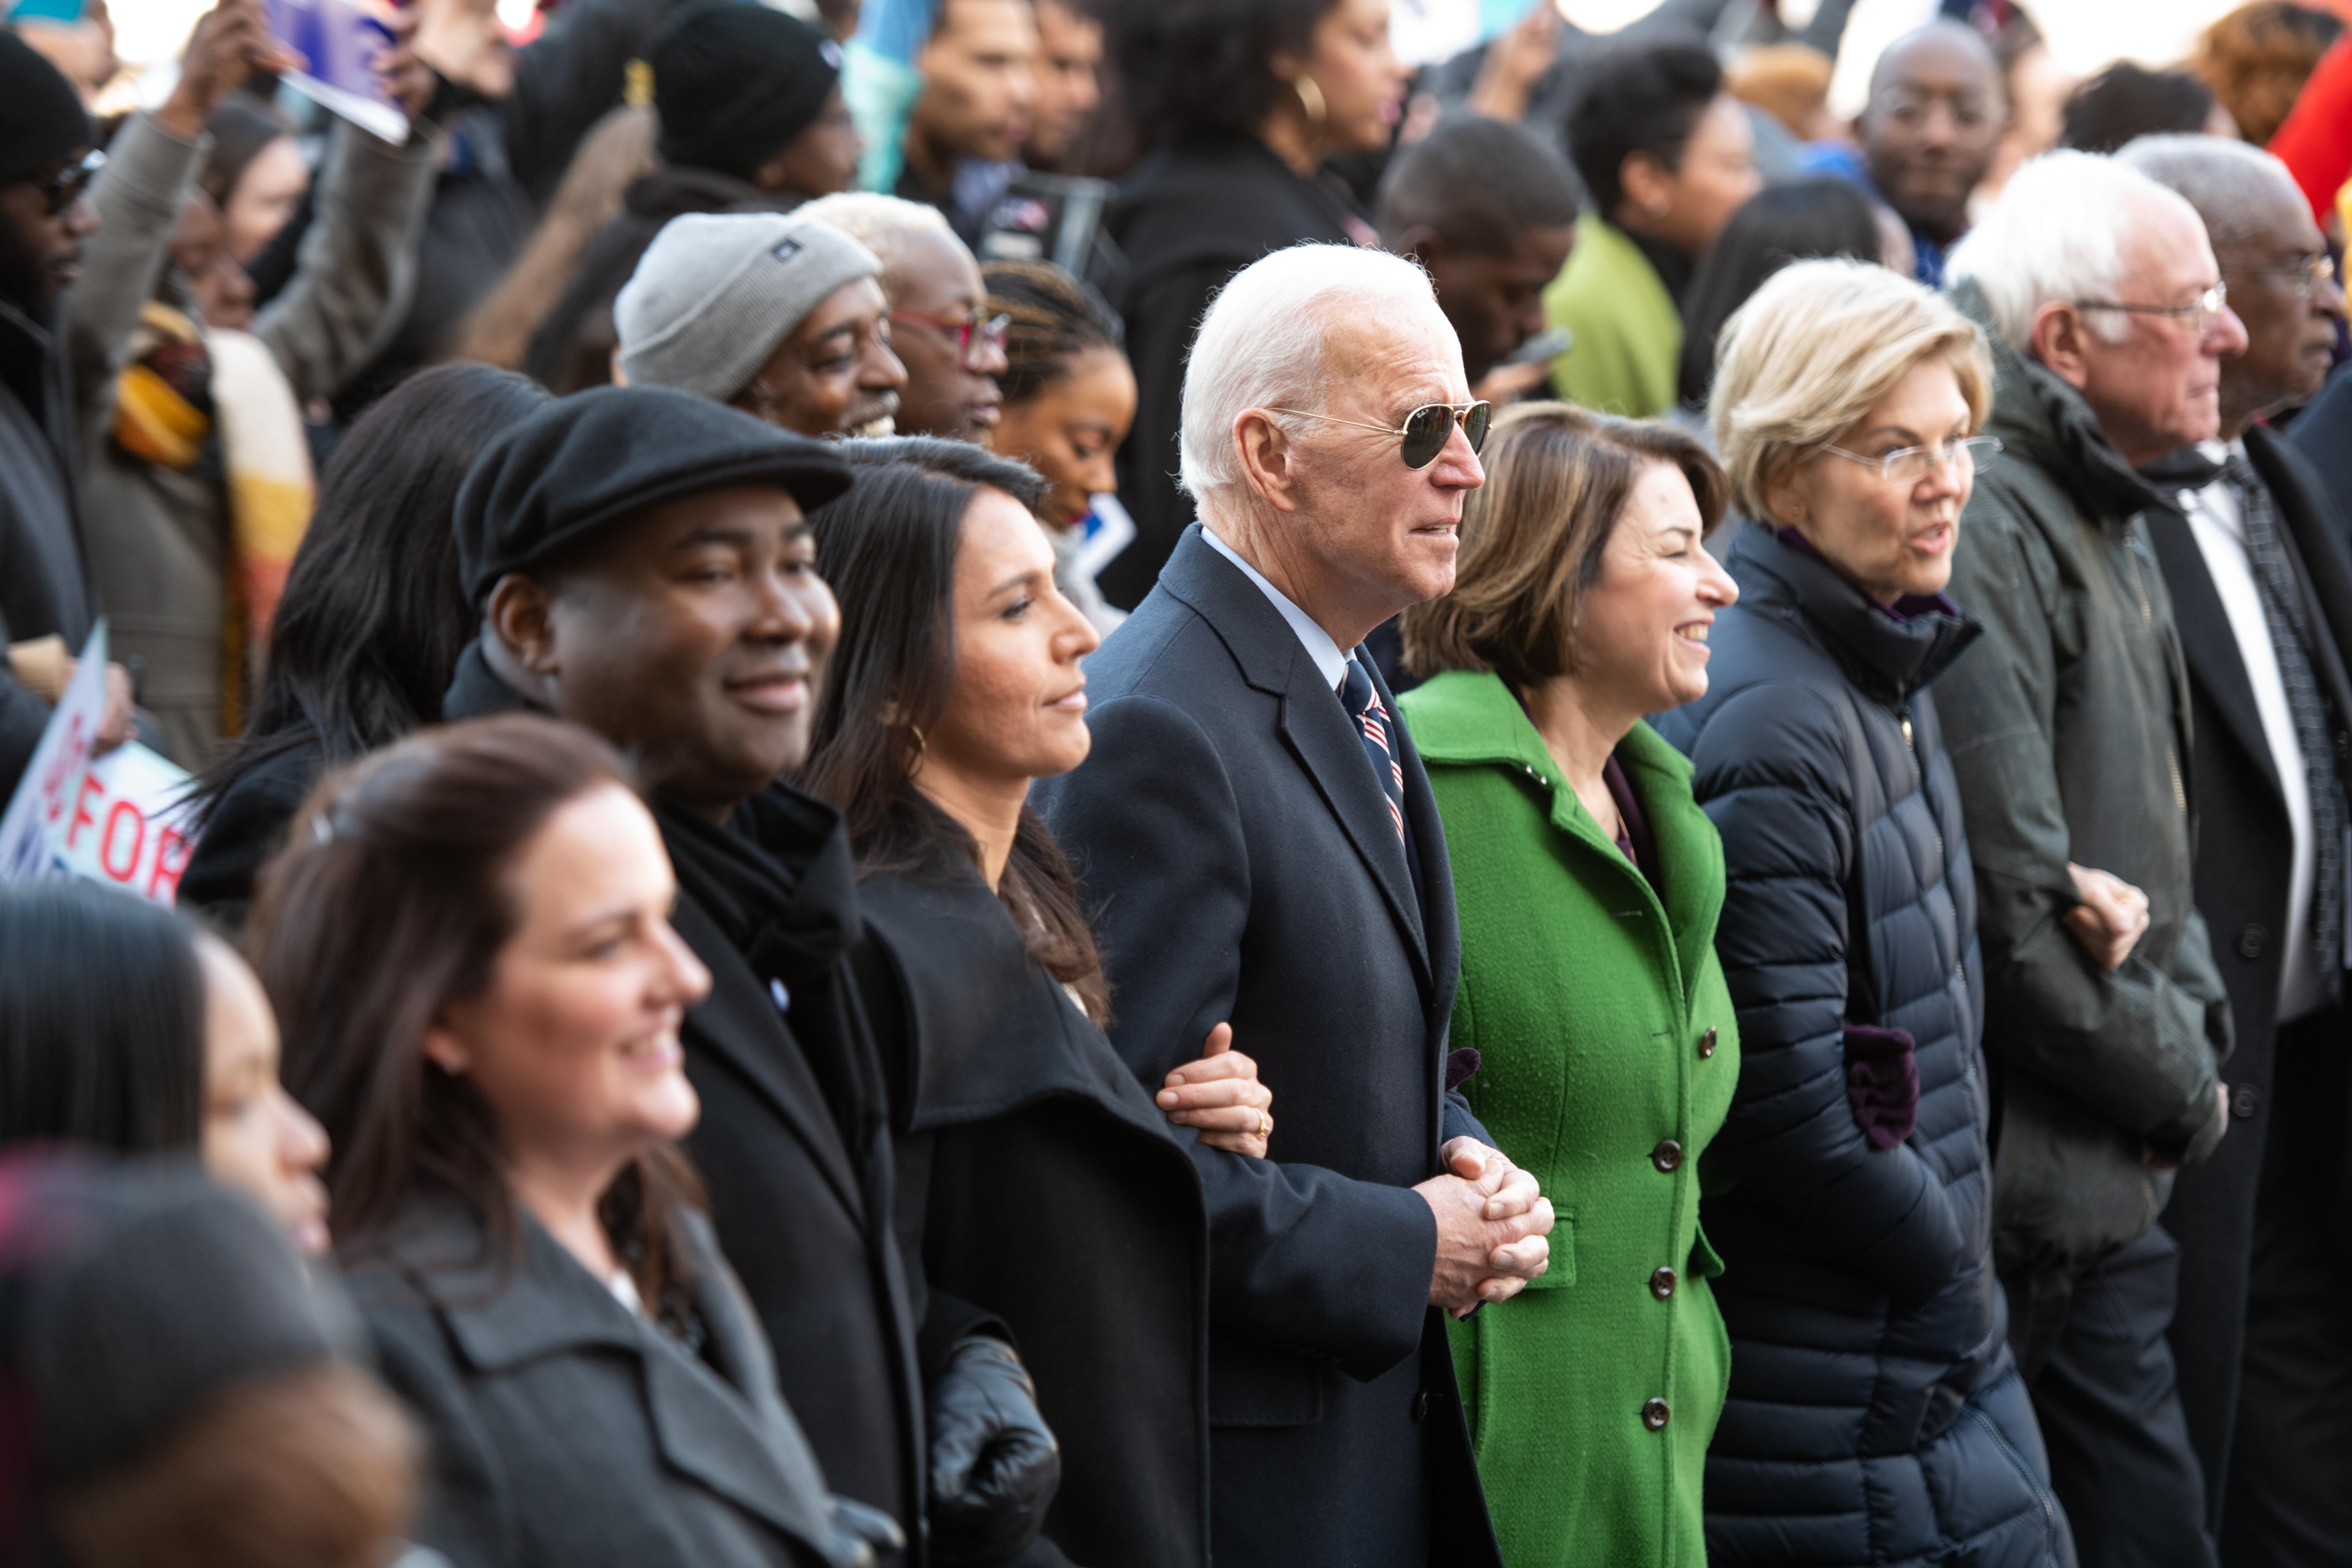 Tulsi Gabbard, Joe Biden, Amy Klobuchar, Elizabeth Warren, and Bernie Sanders link arms in a row of marchers.